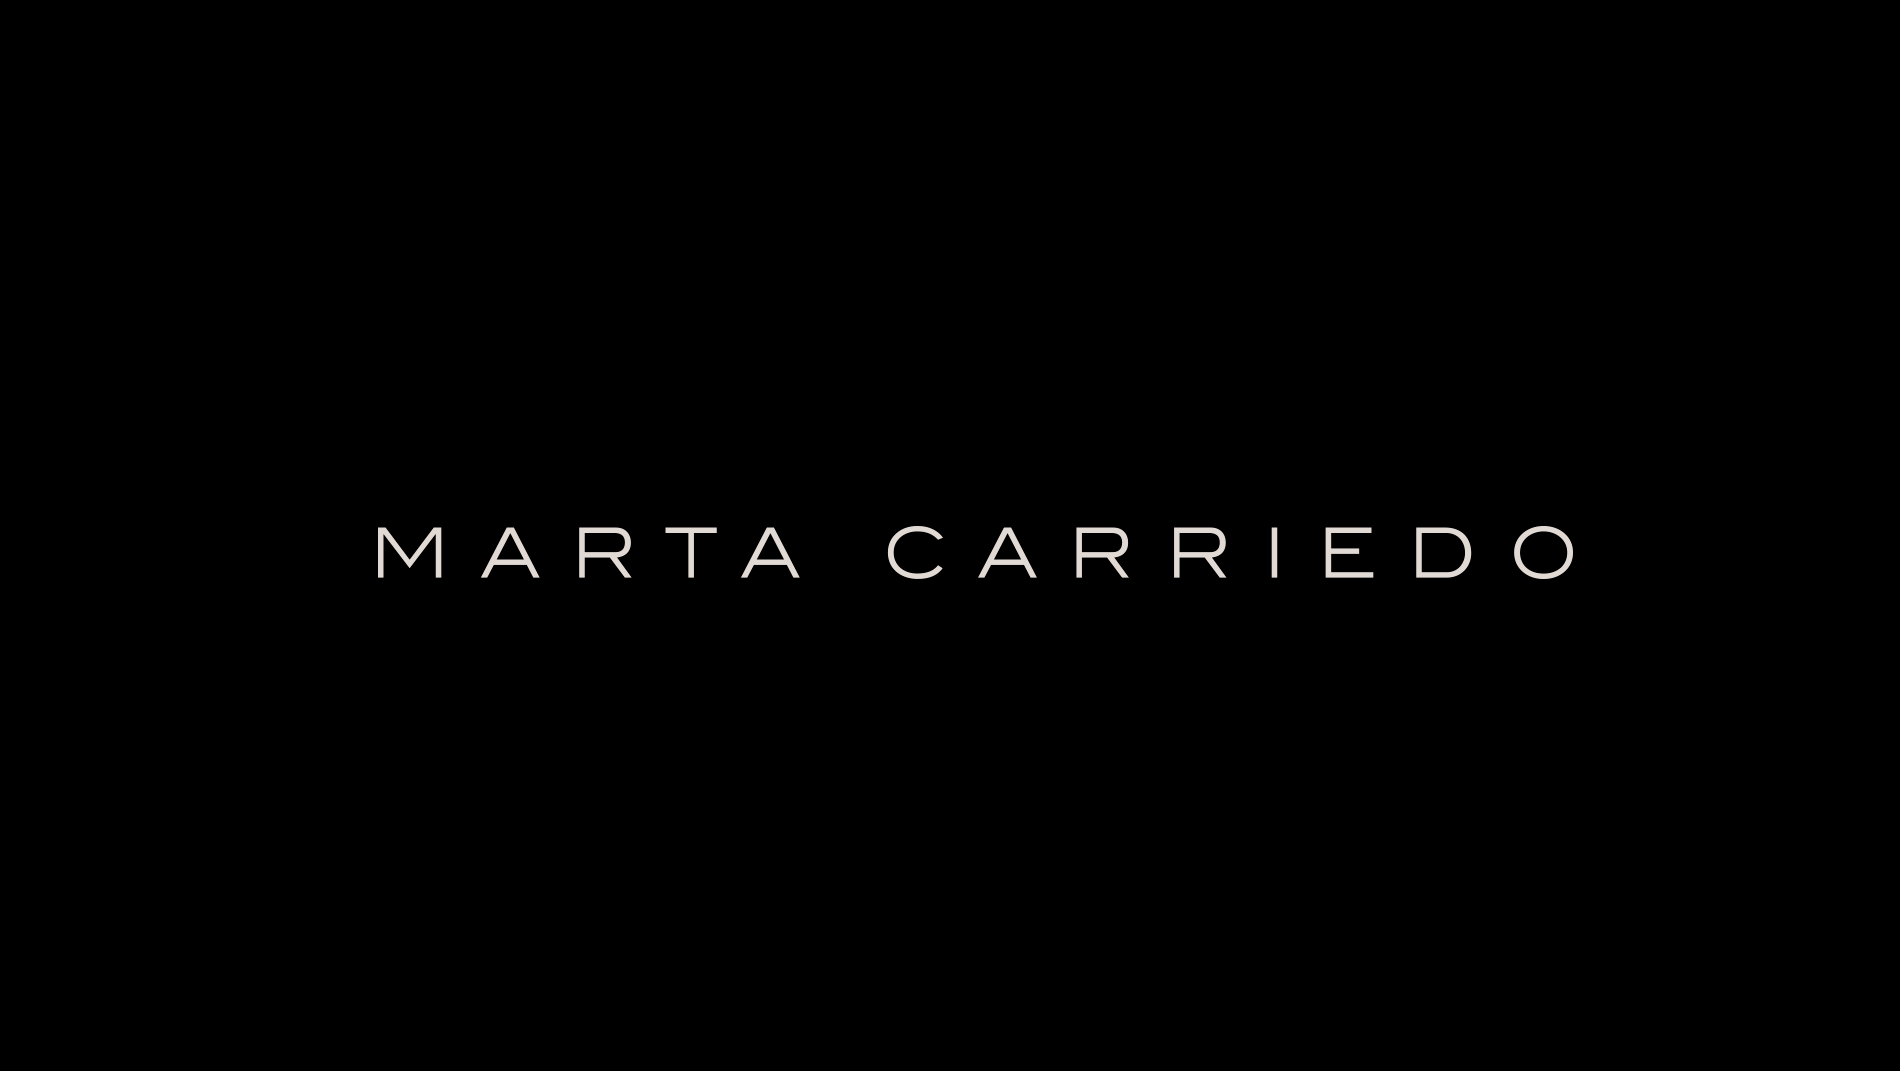 Marta Carriedo brand